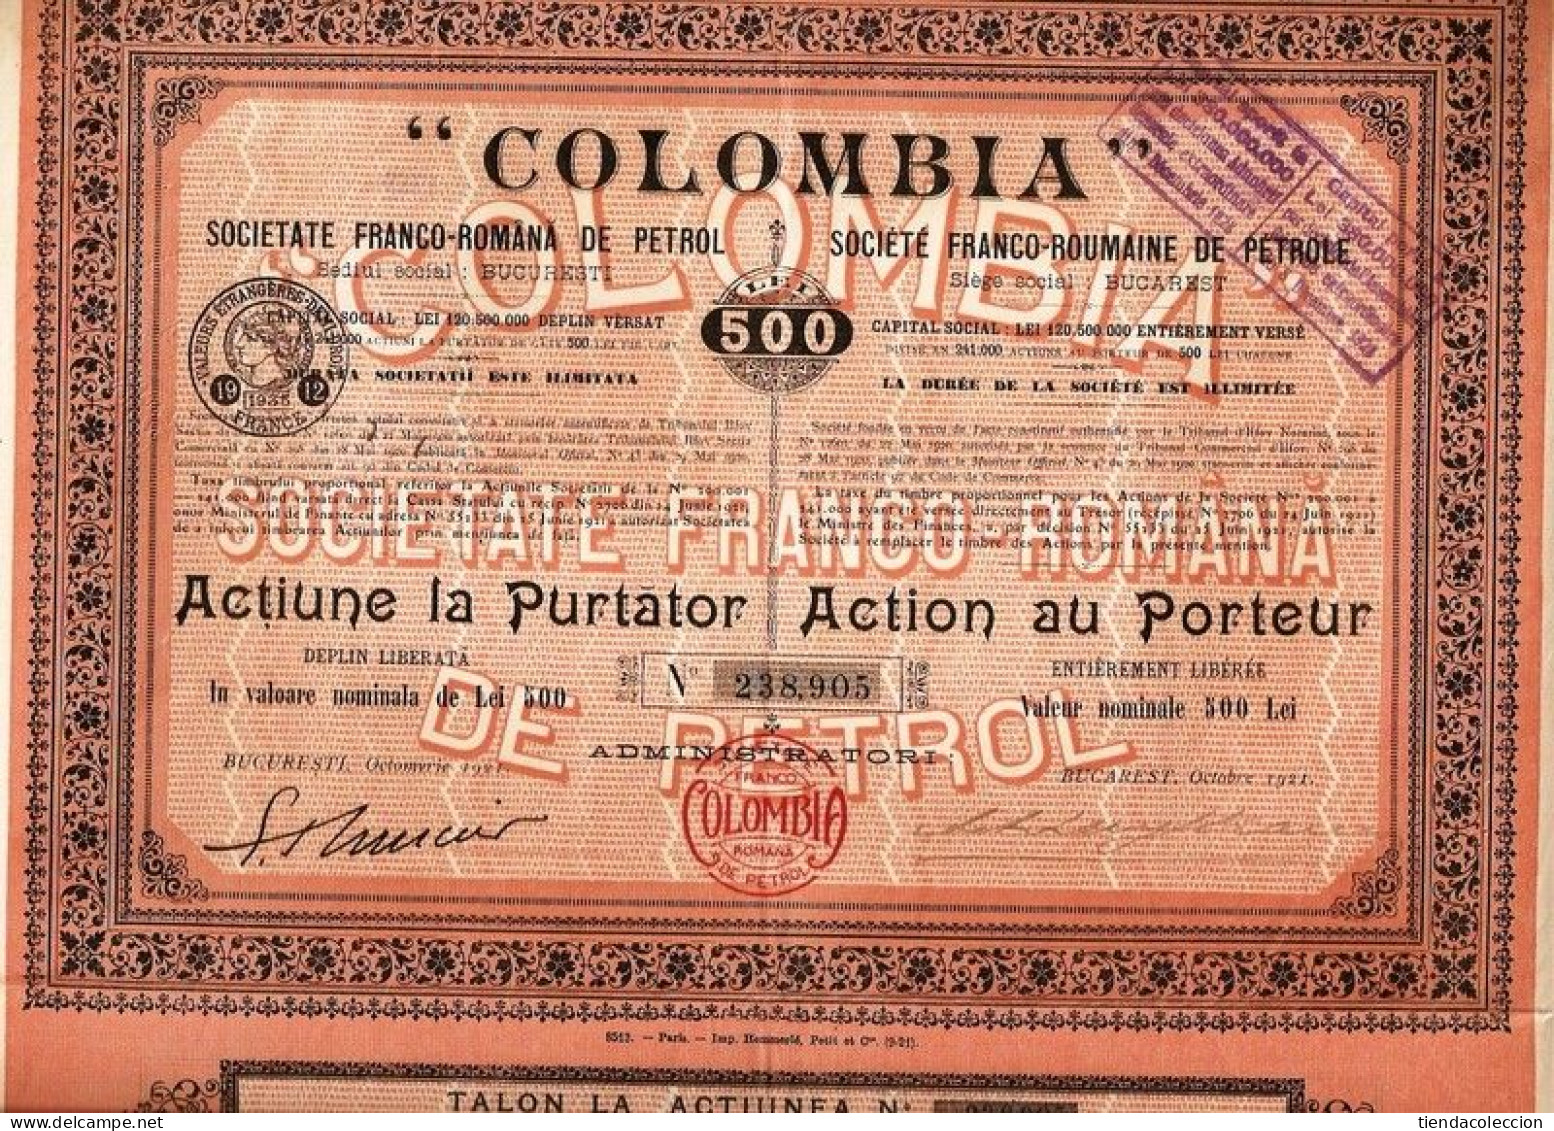 "COLOMBIA" SOCIEDA FRANCO-RUMANA DE PETROLEO - Oil